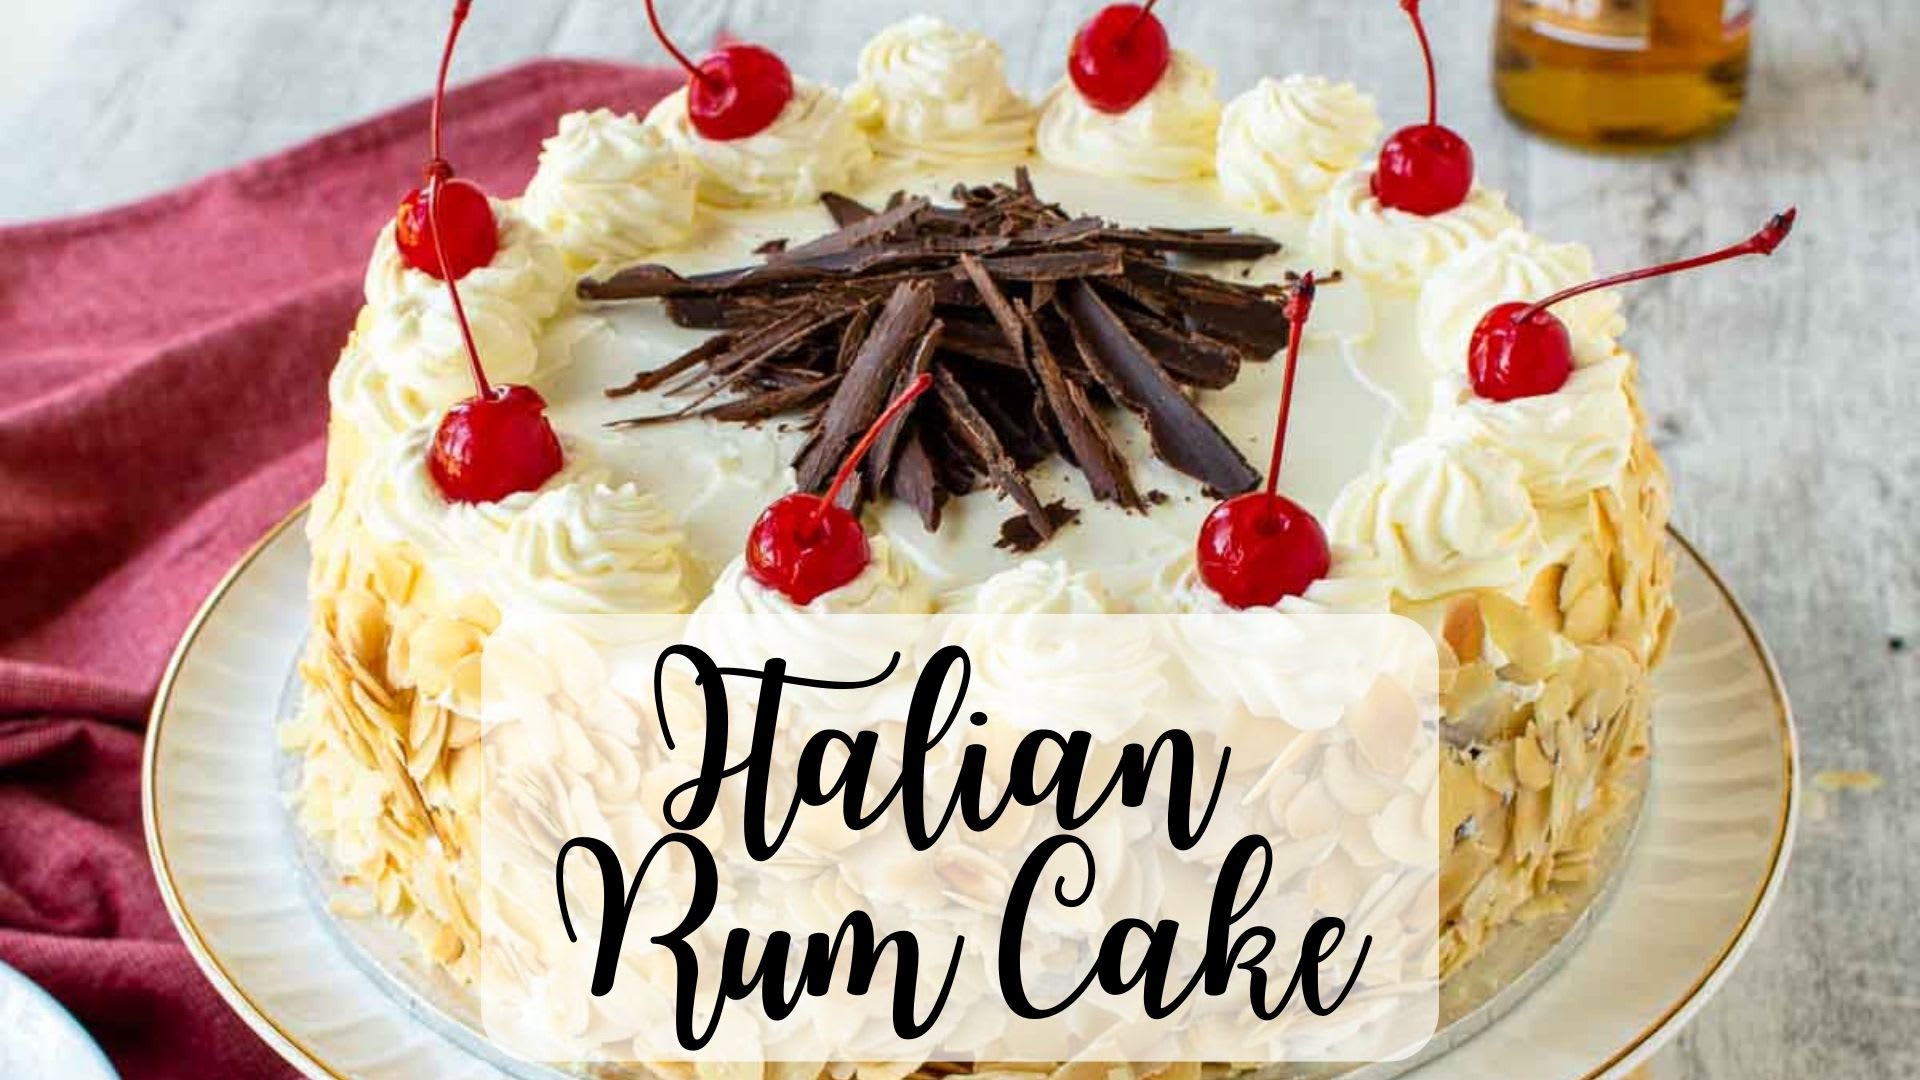 Italian Cakes Plain and Fancy